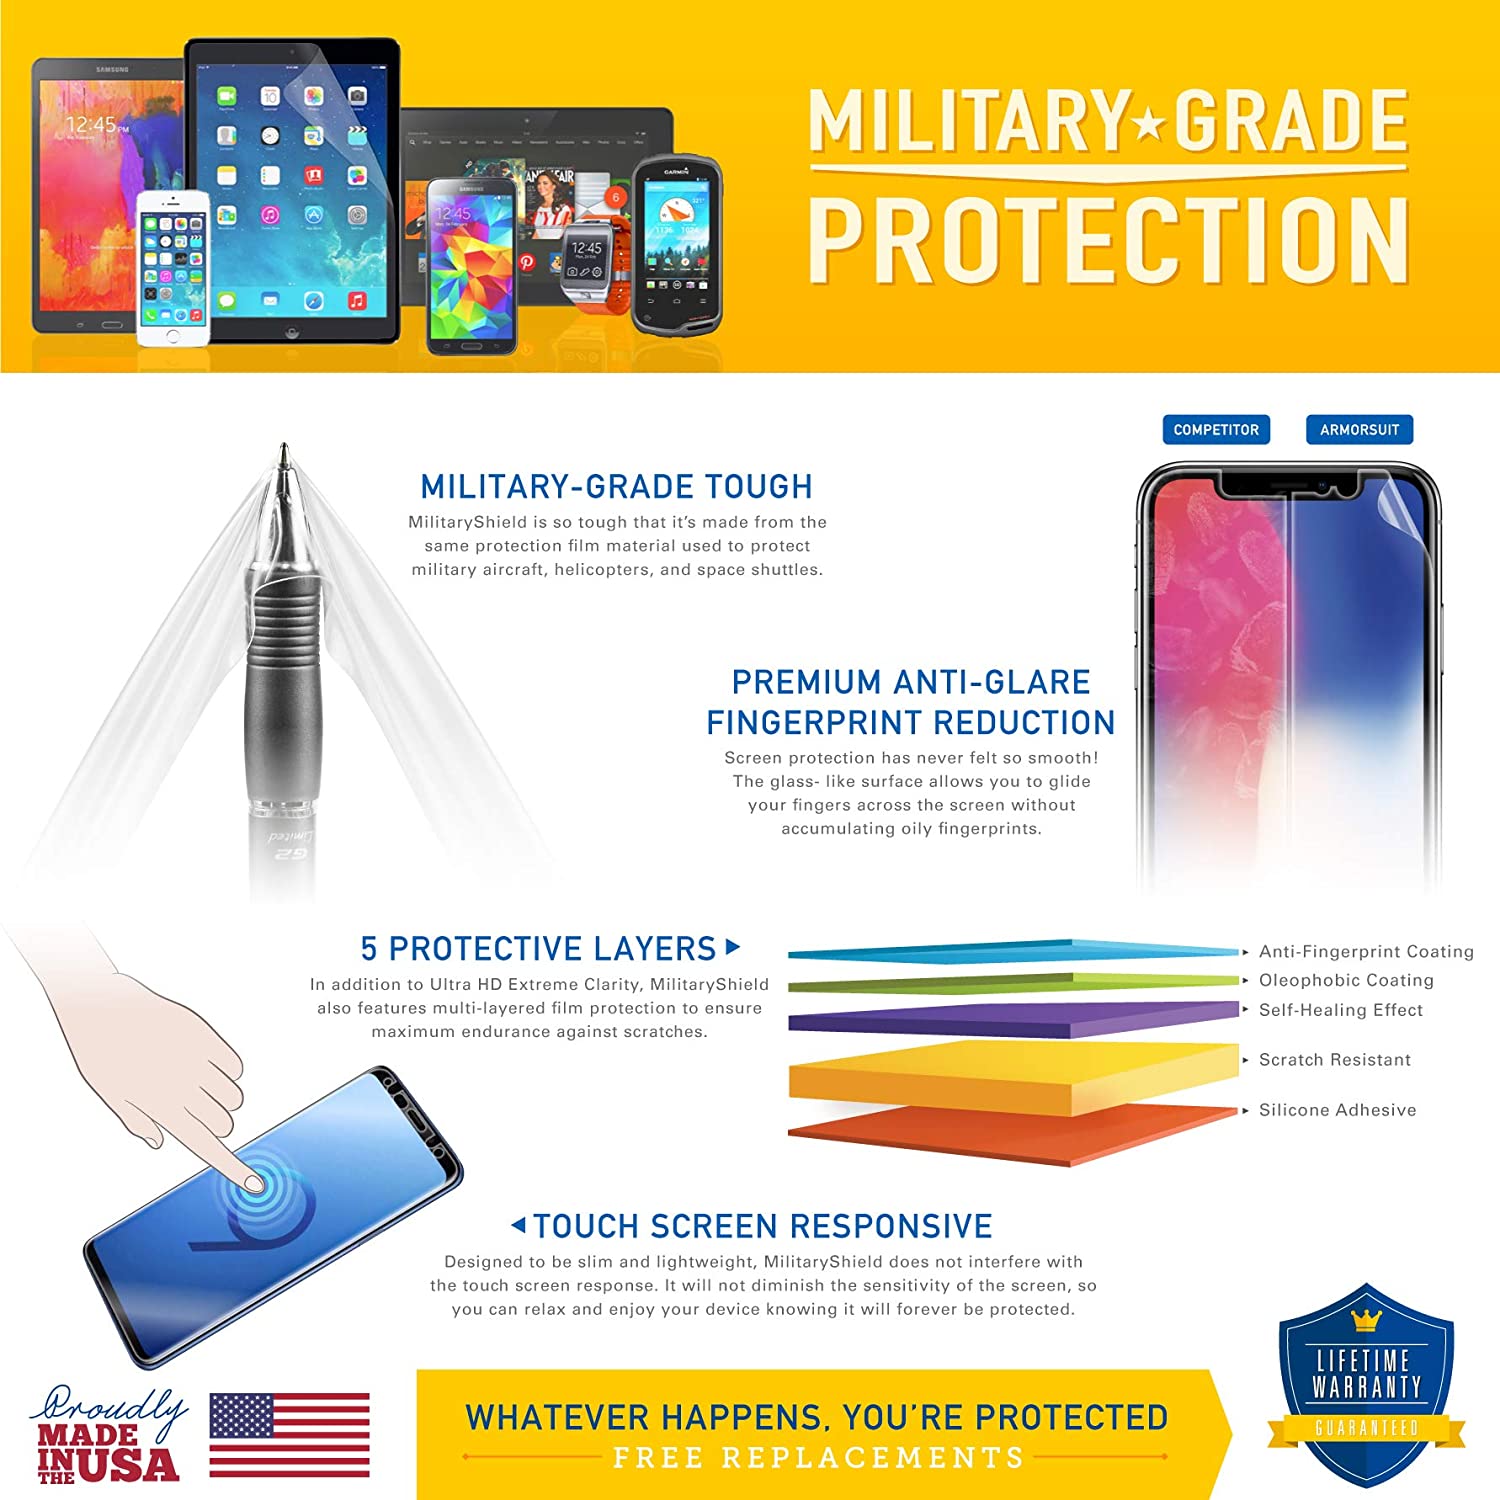 Samsung Galaxy S2 SkyRocket Screen Protector + Carbon Fiber Skin Protector